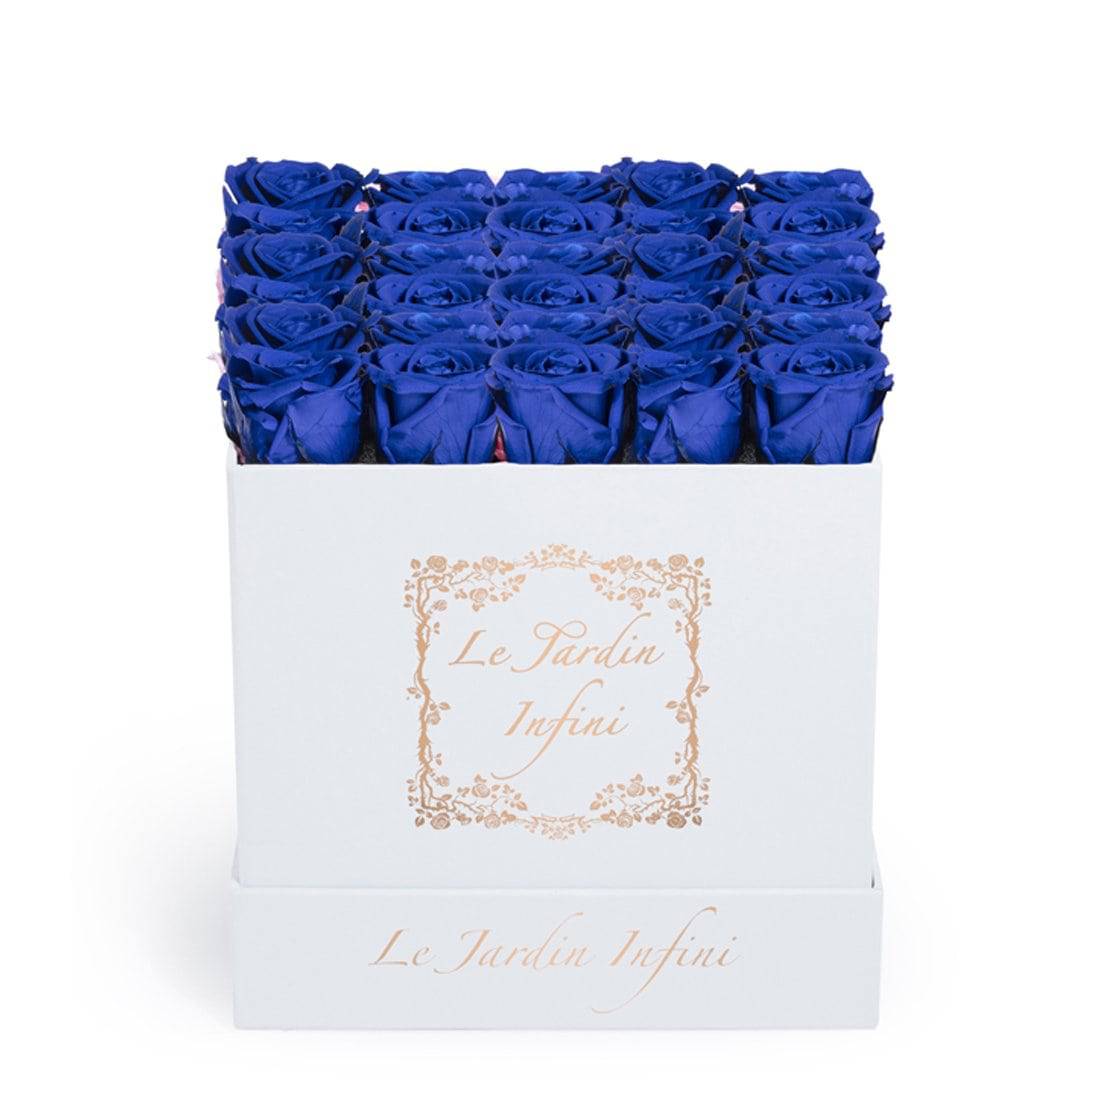 Royal Blue Preserved Roses - Medium Square White Box - Le Jardin Infini Roses in a Box